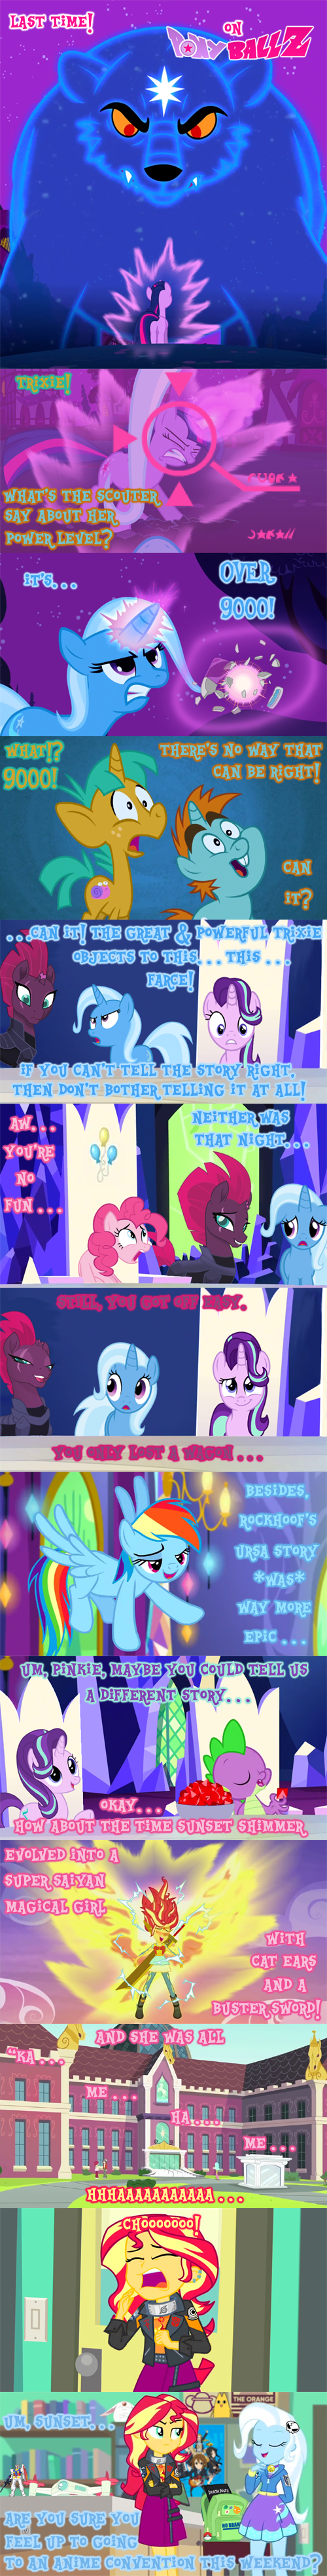 Anime Traps-My Little pony Meme. by brandonale on DeviantArt